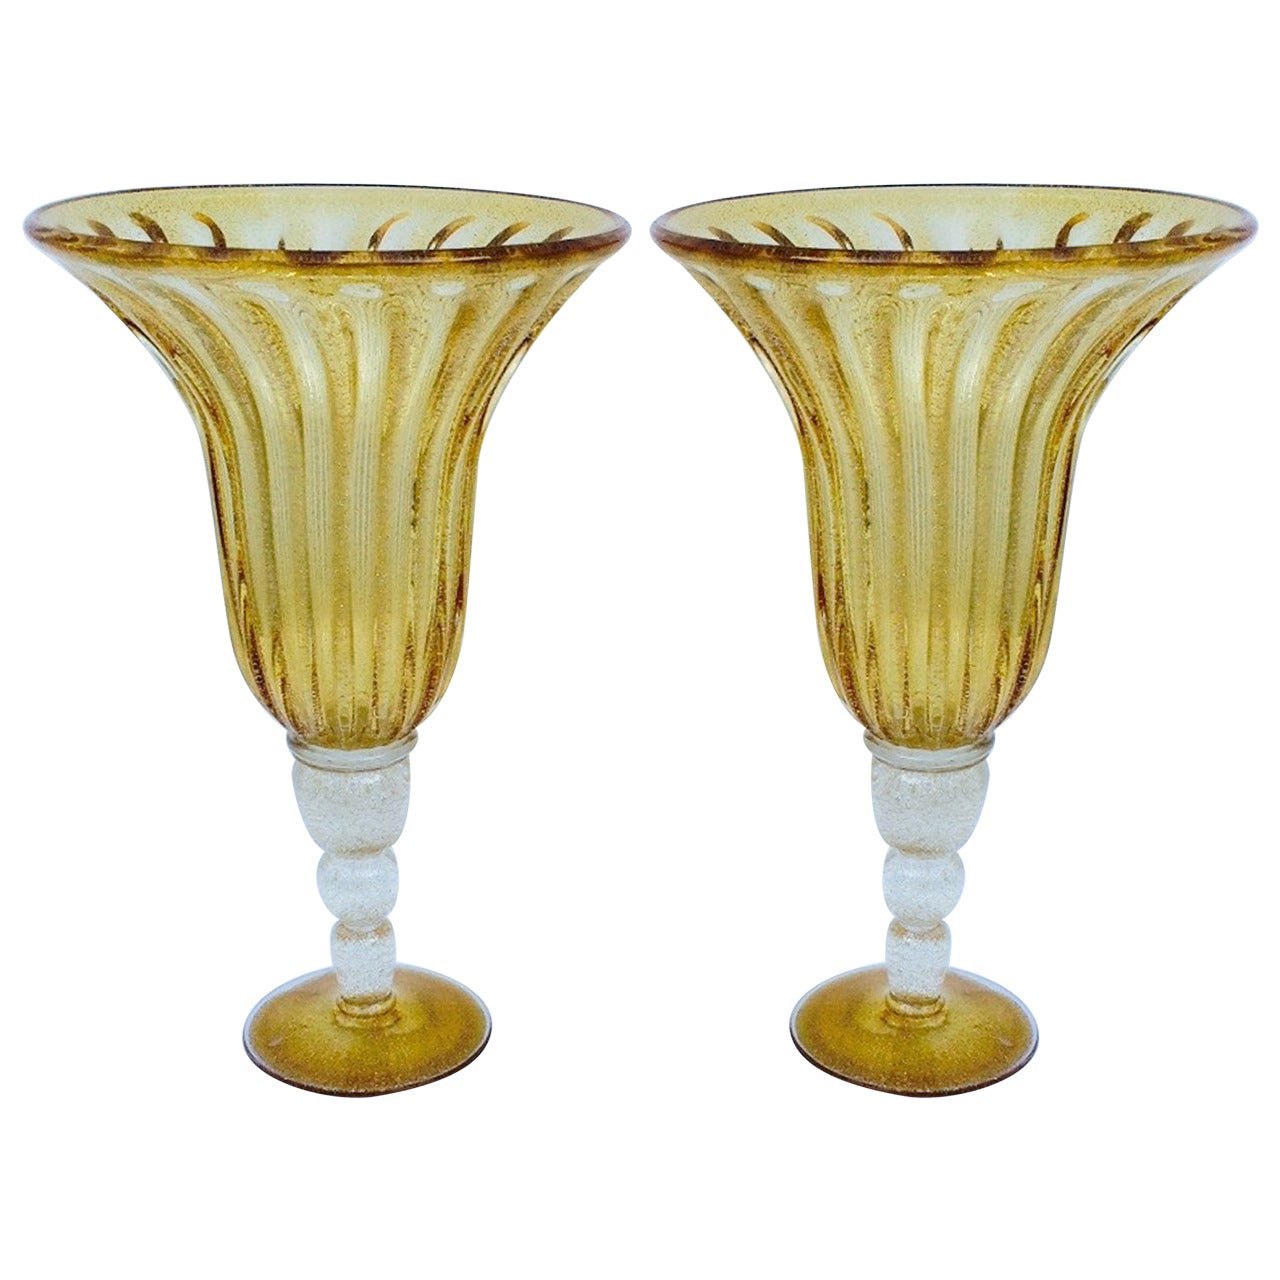 Monumental Pair of Murano Vases, circa 1970s